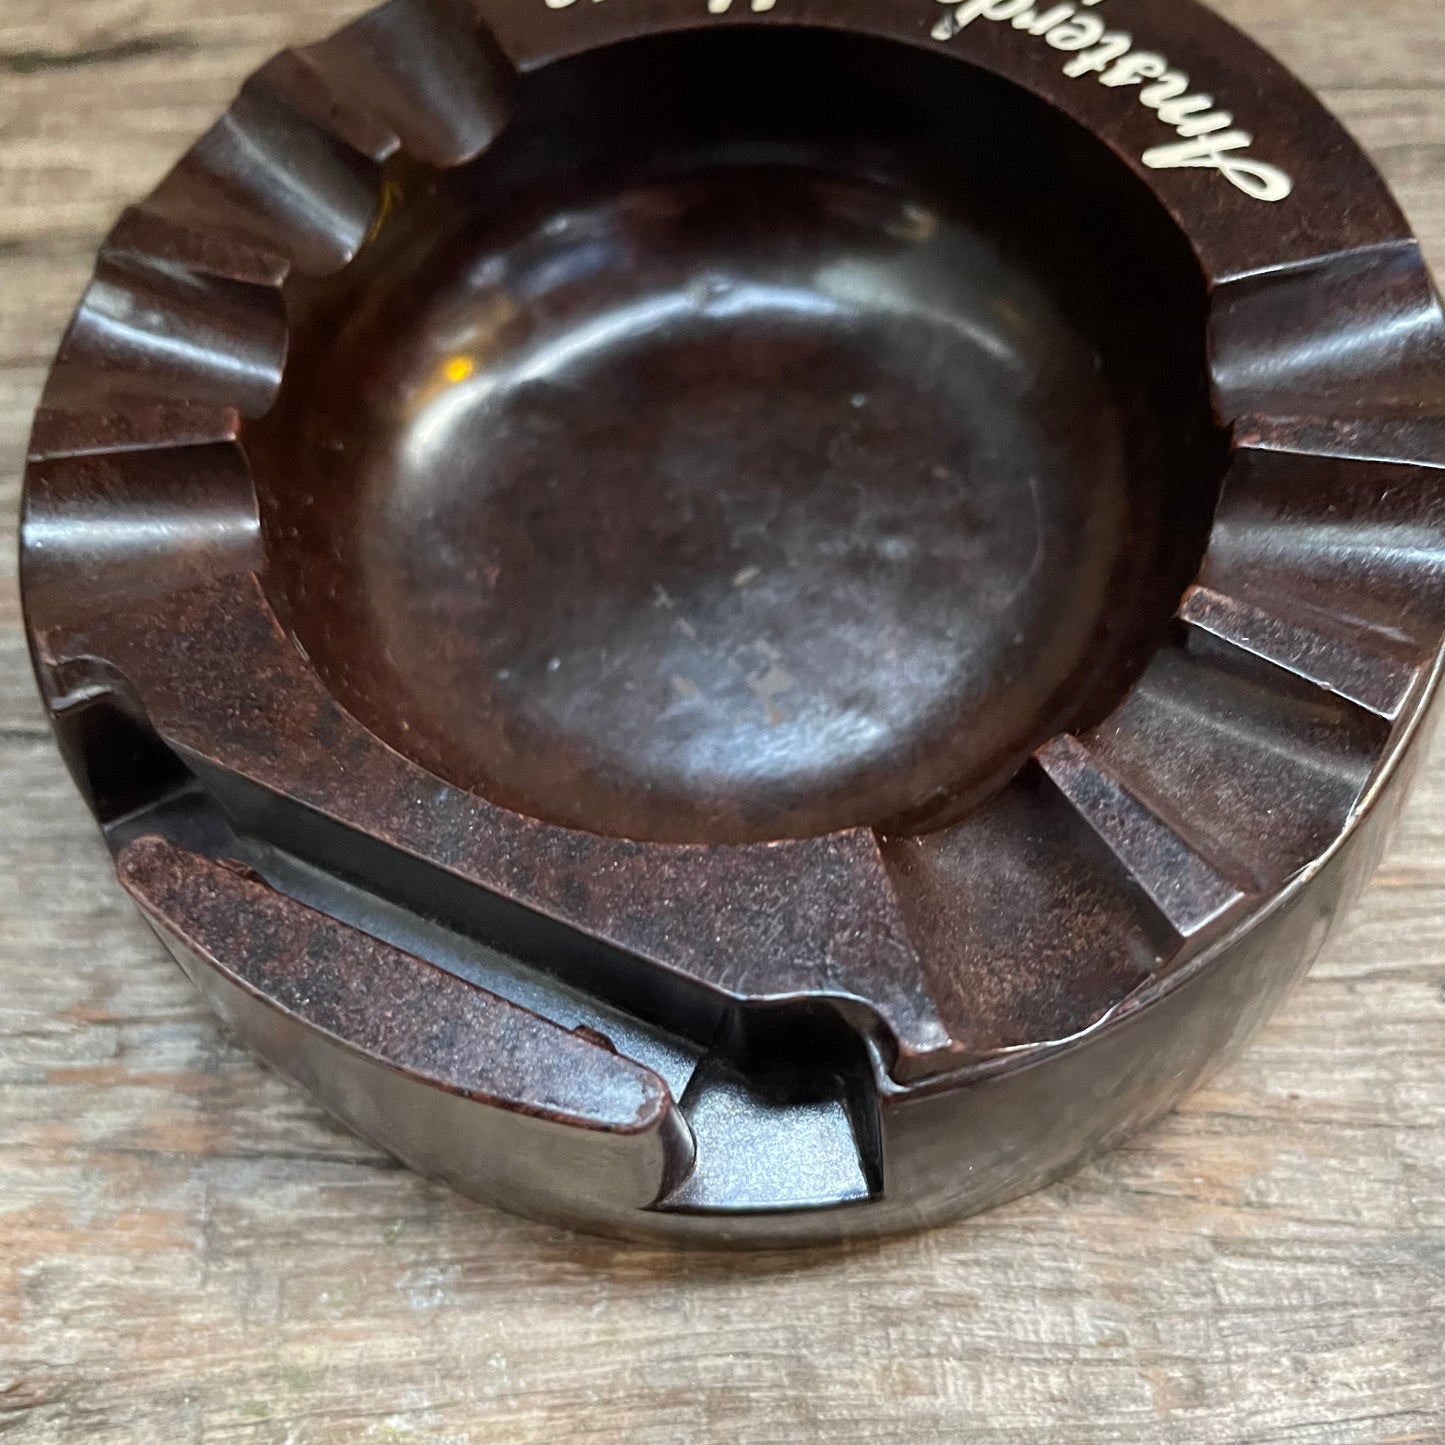 【USA vintage】Amsterdam House Restaurant メラミン樹脂　灰皿　アッシュトレイ